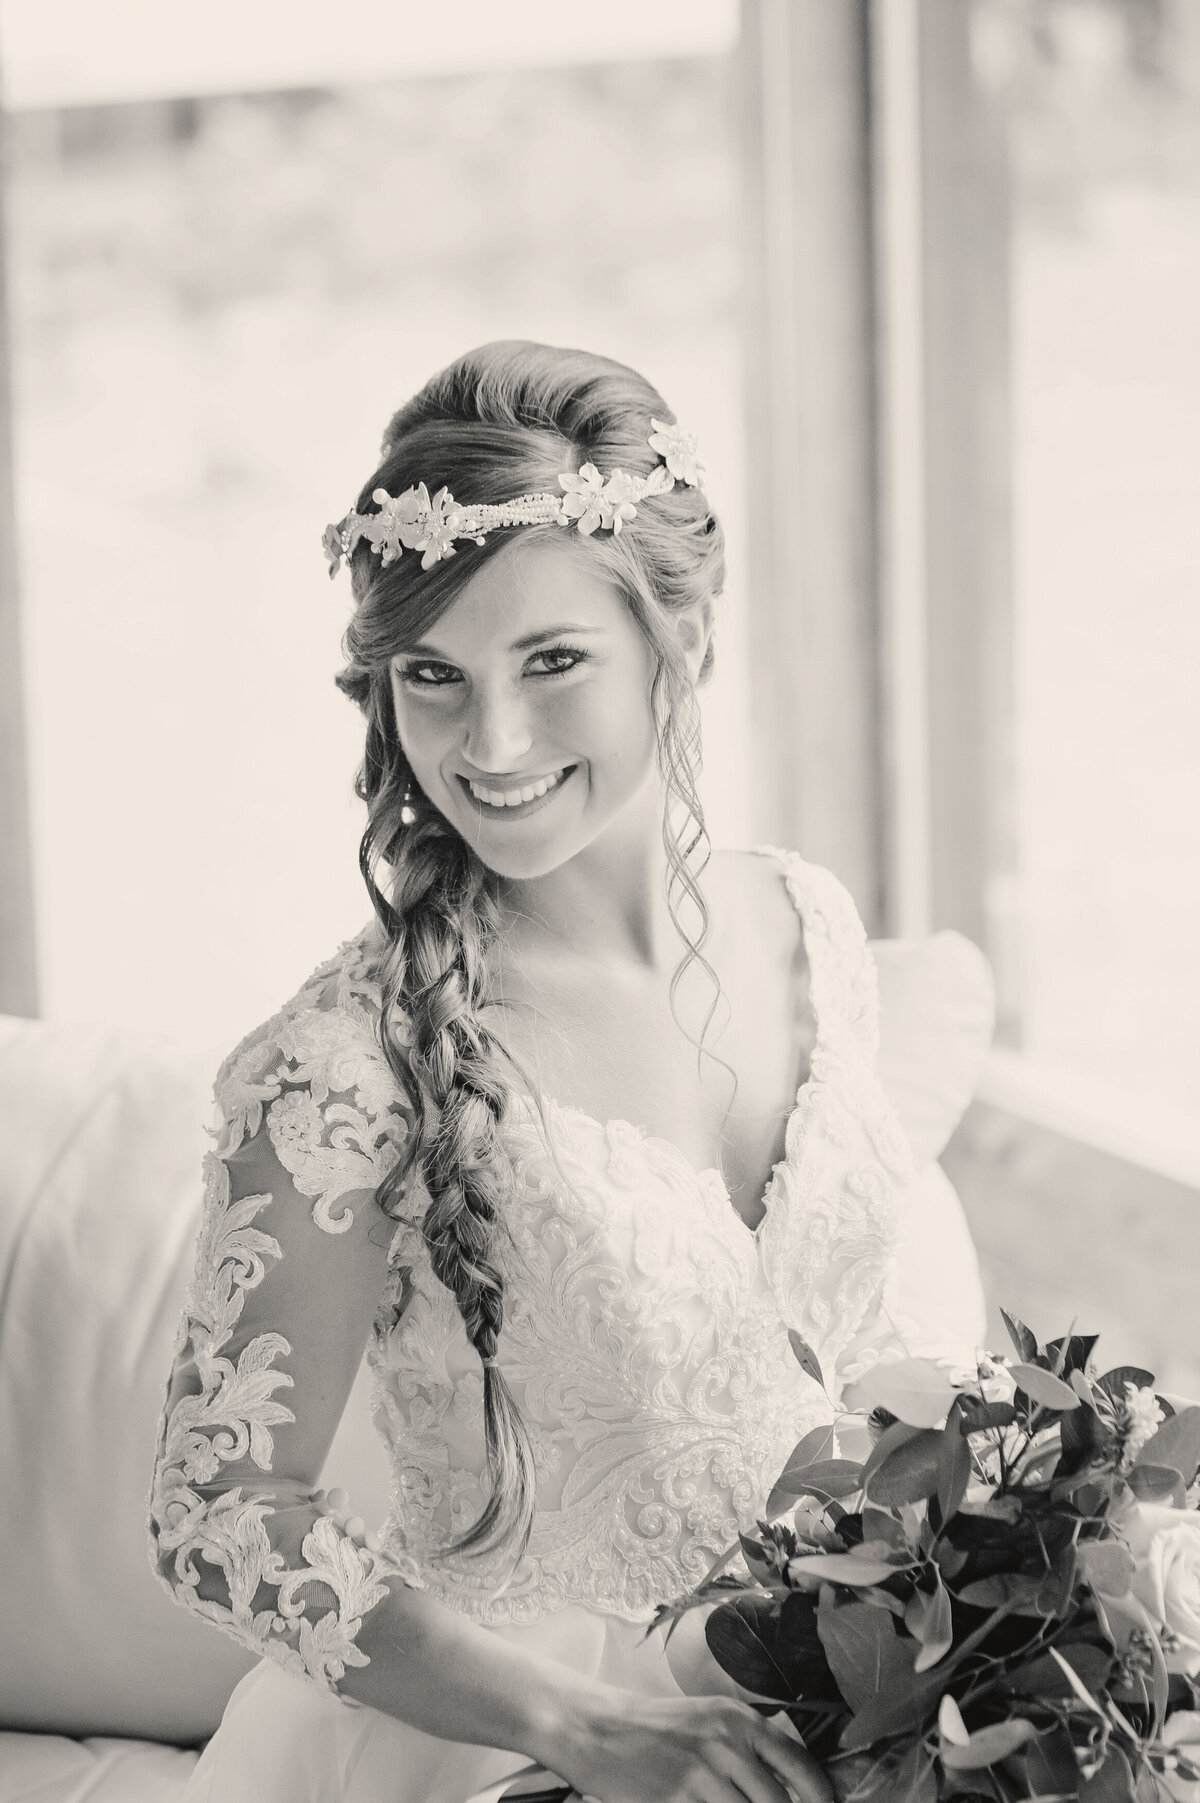 Smiling bride with floral head piece.